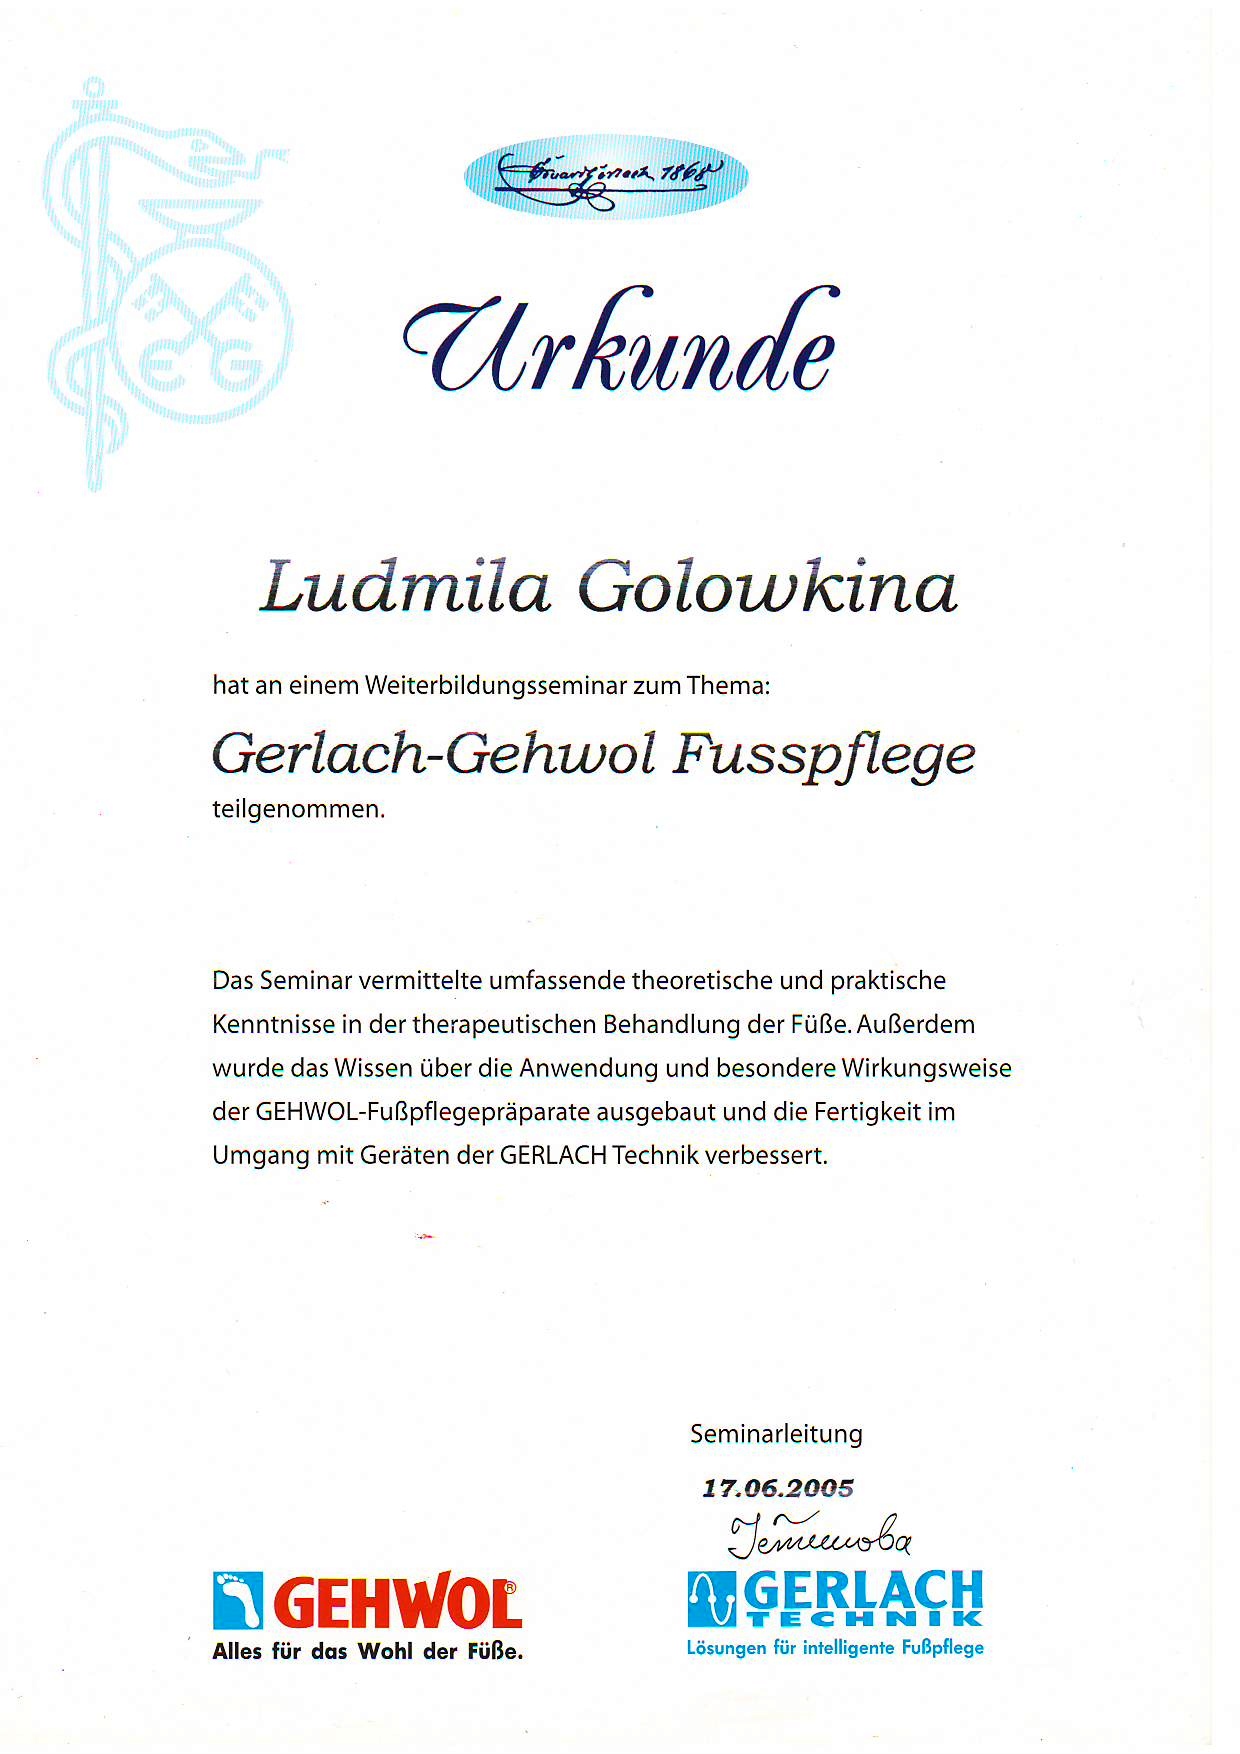 Сертификат Головкина